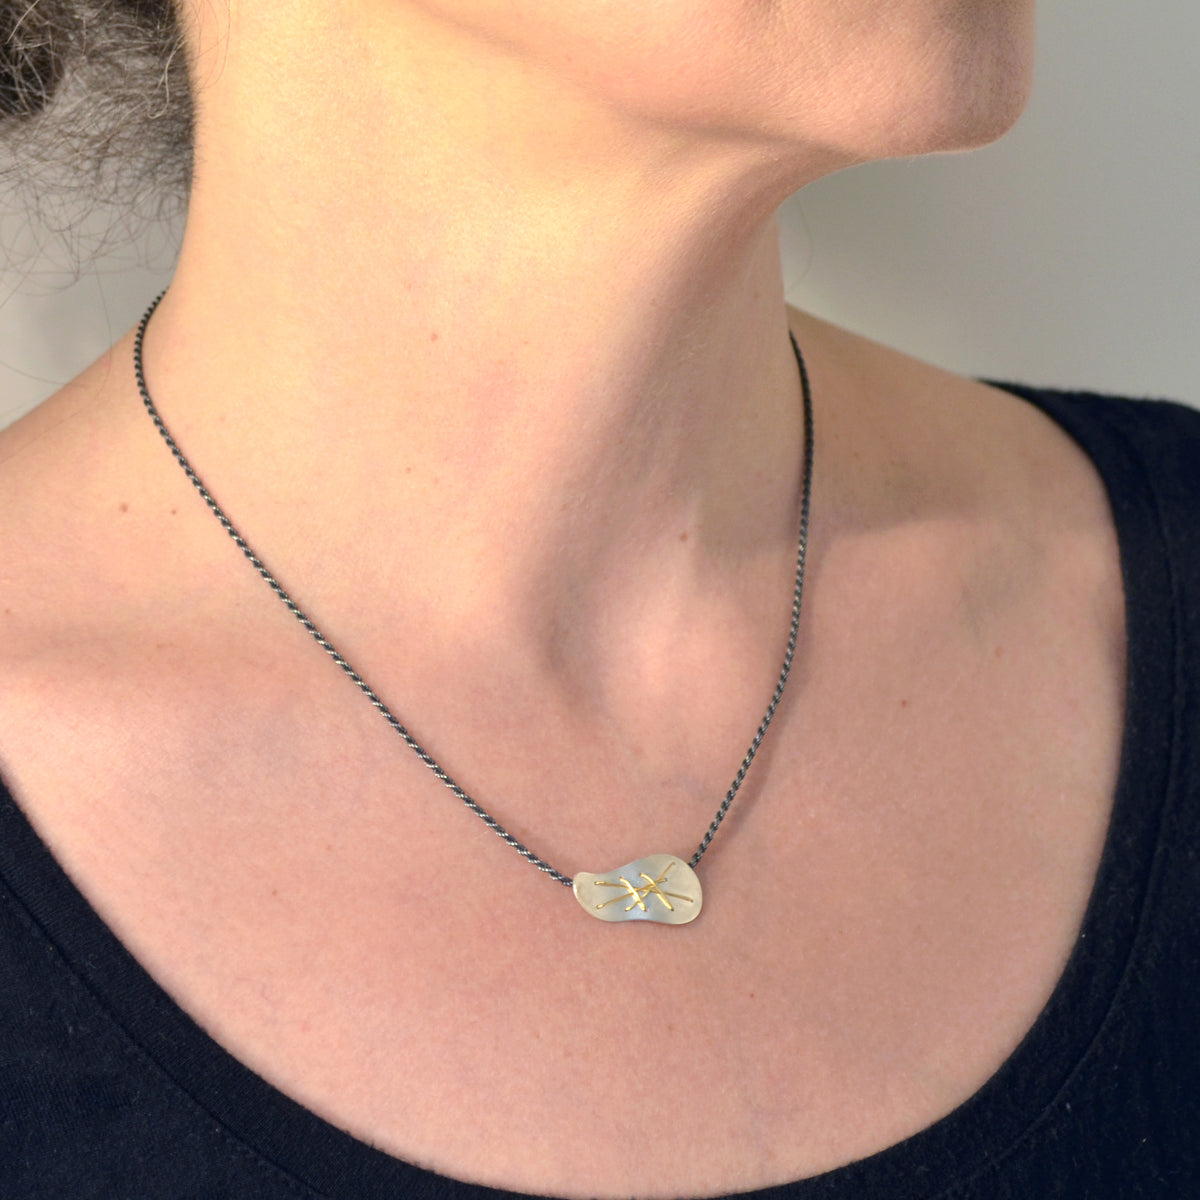 Suzanne Schwartz wearing Single Cascade Necklace pendant on chain - horizontal